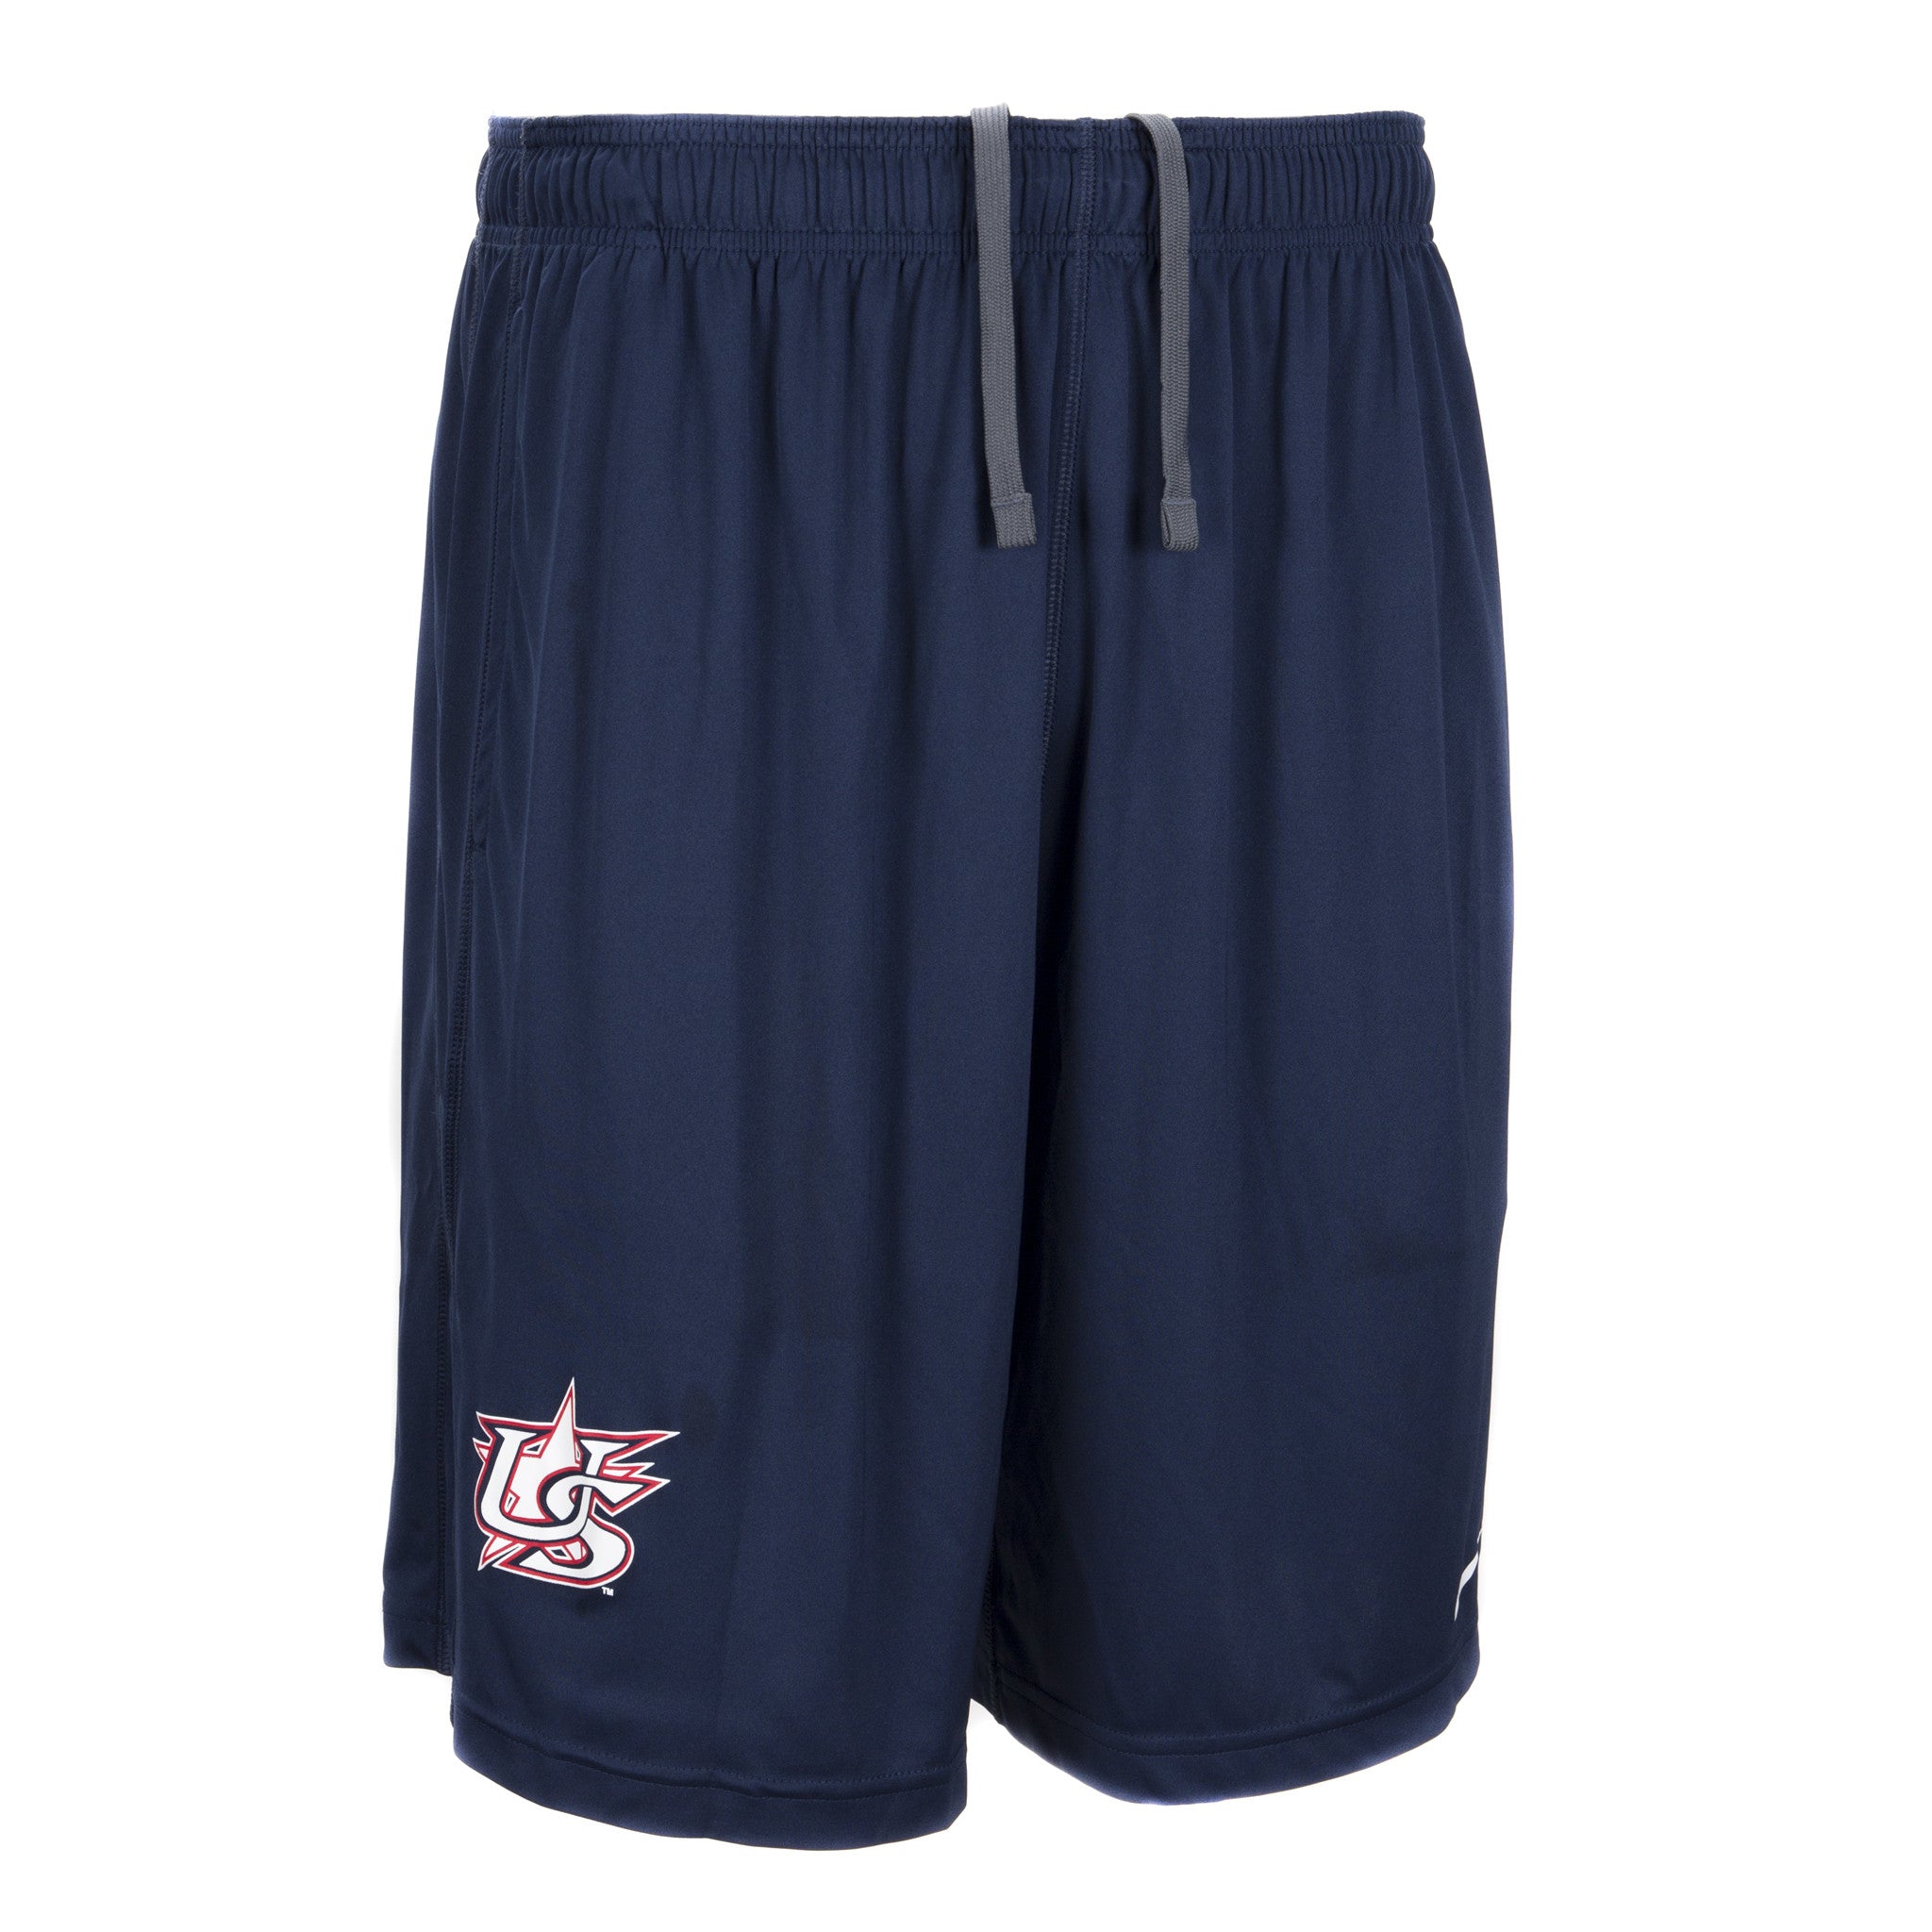 Nike Navy Shorts With Pockets | USA Baseball Shop